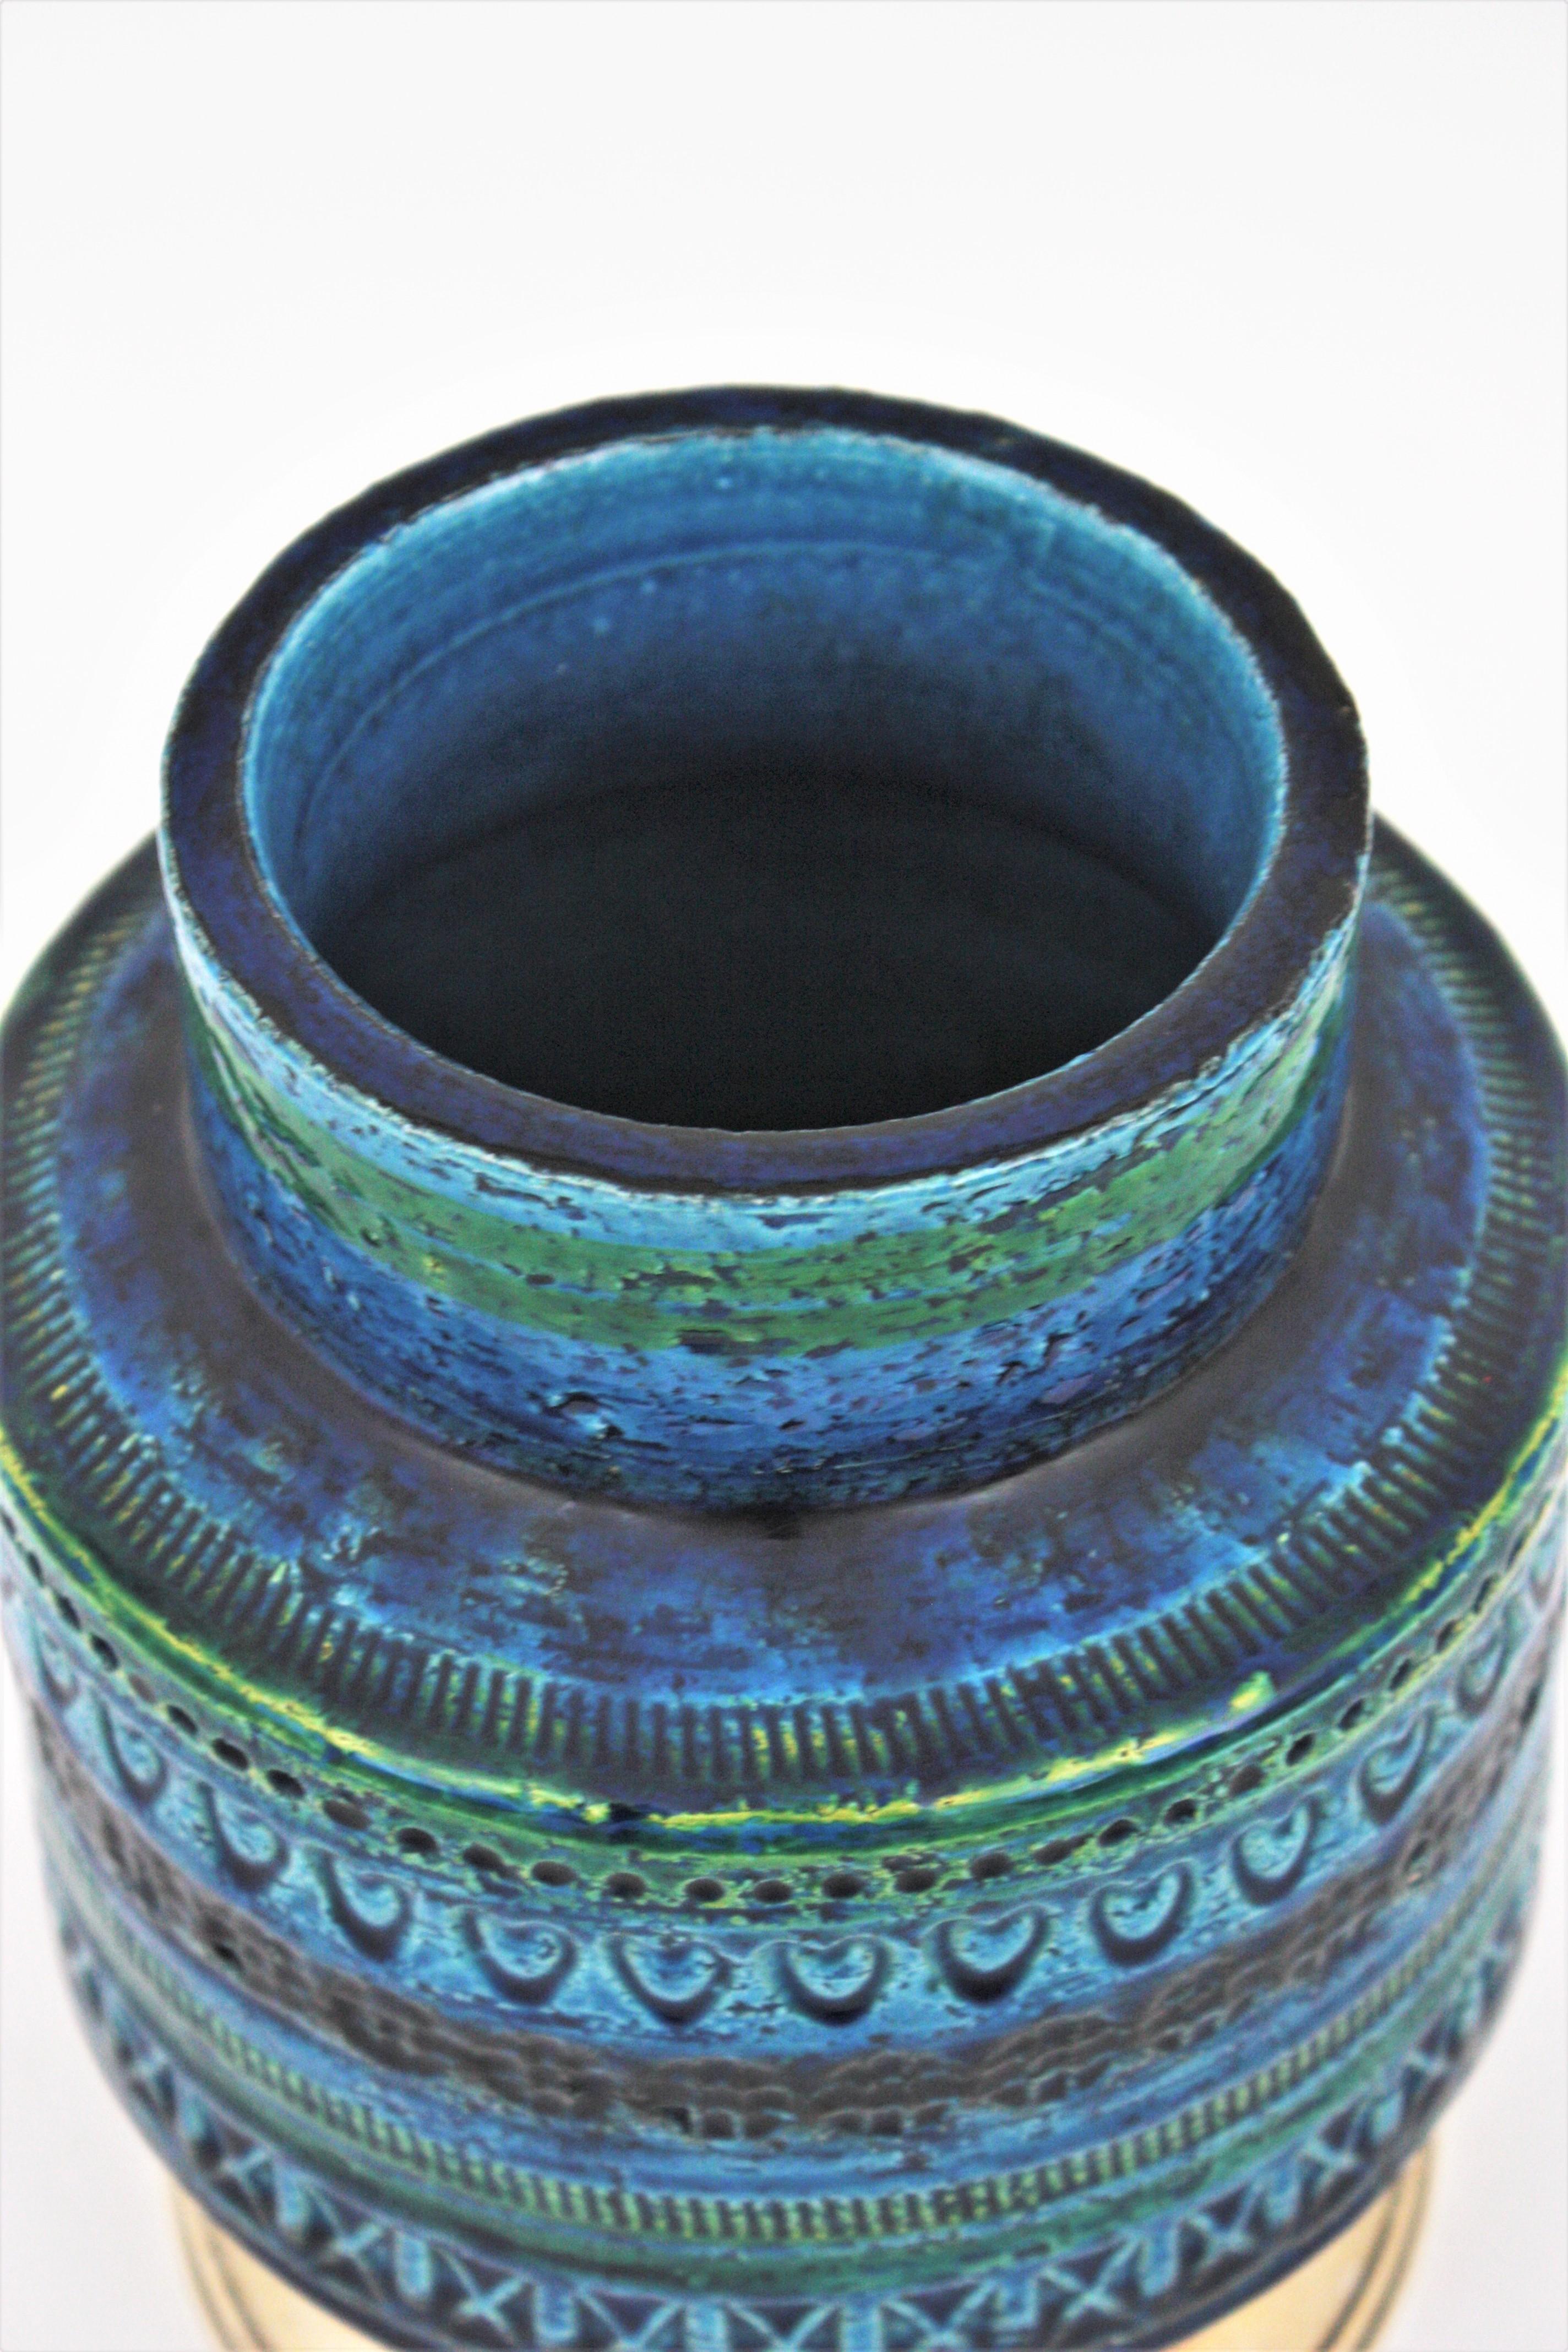 Bitossi Aldo Londi Rimini Blaue Keramikvase auf Sterlingsilbersockel, 1960er Jahre (Handgefertigt) im Angebot